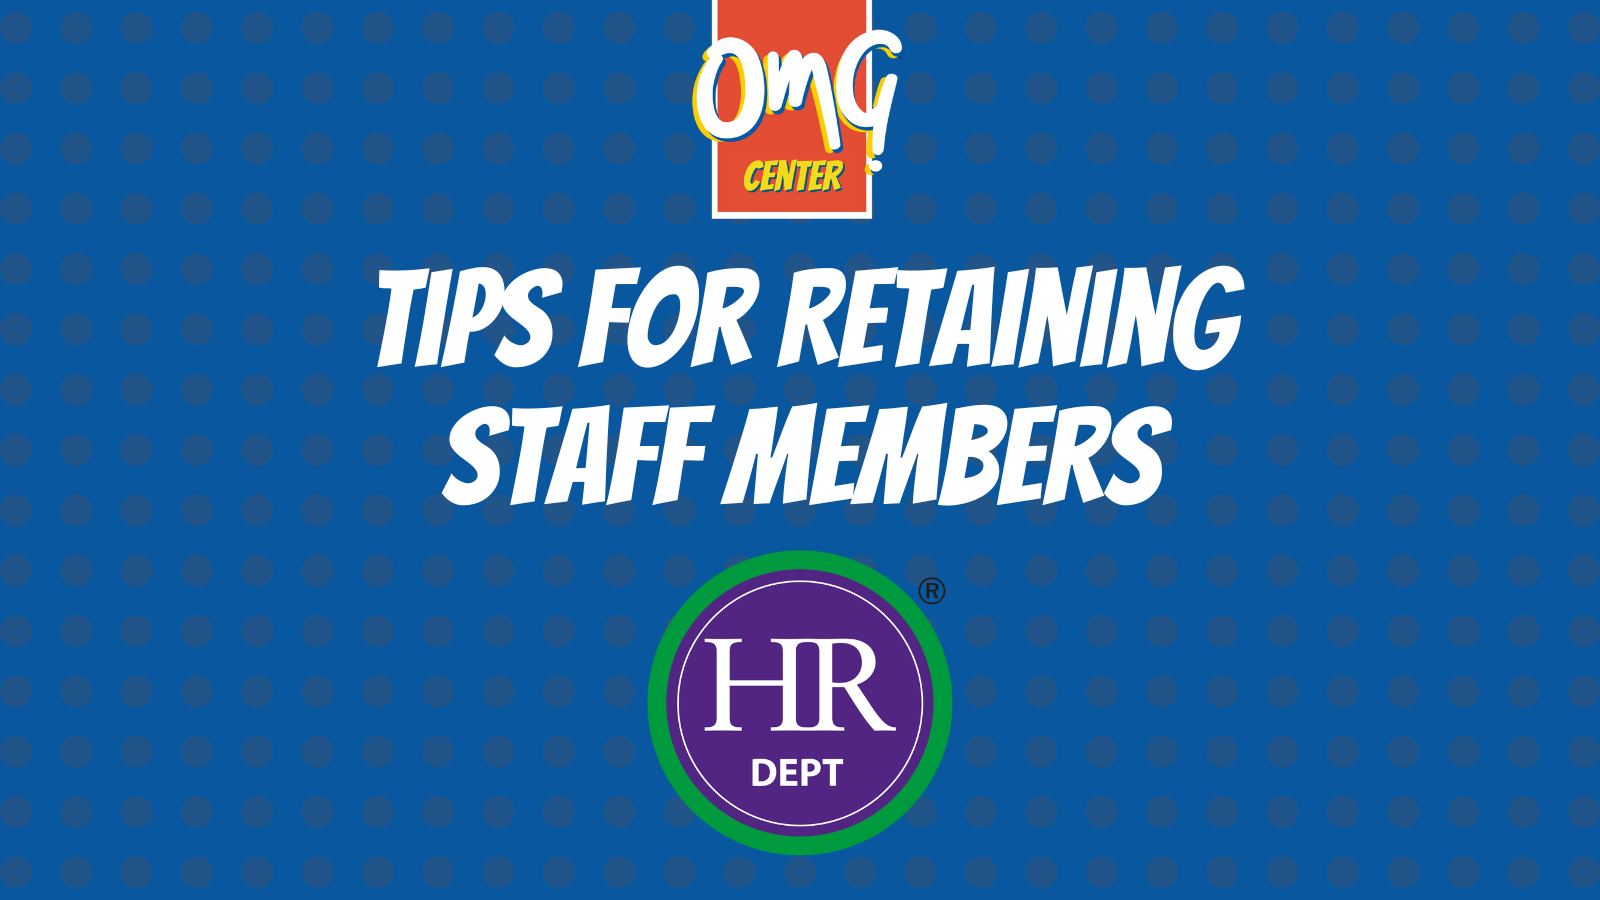 HR Dept - Tips for Retaining Staff Members - Twitter